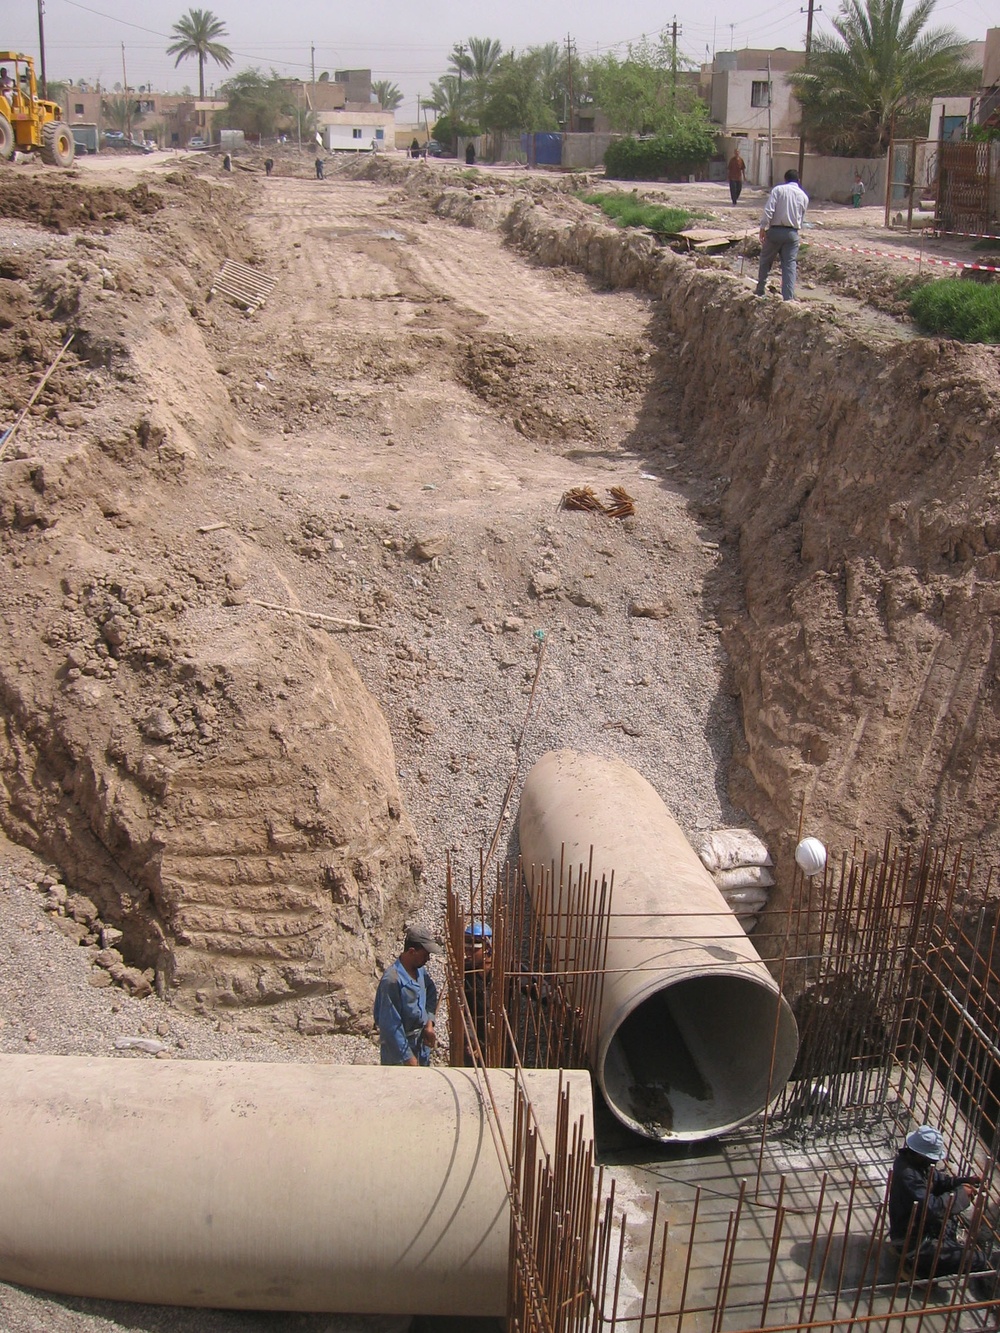 Construction continues on the Zafaraniya main sewage line